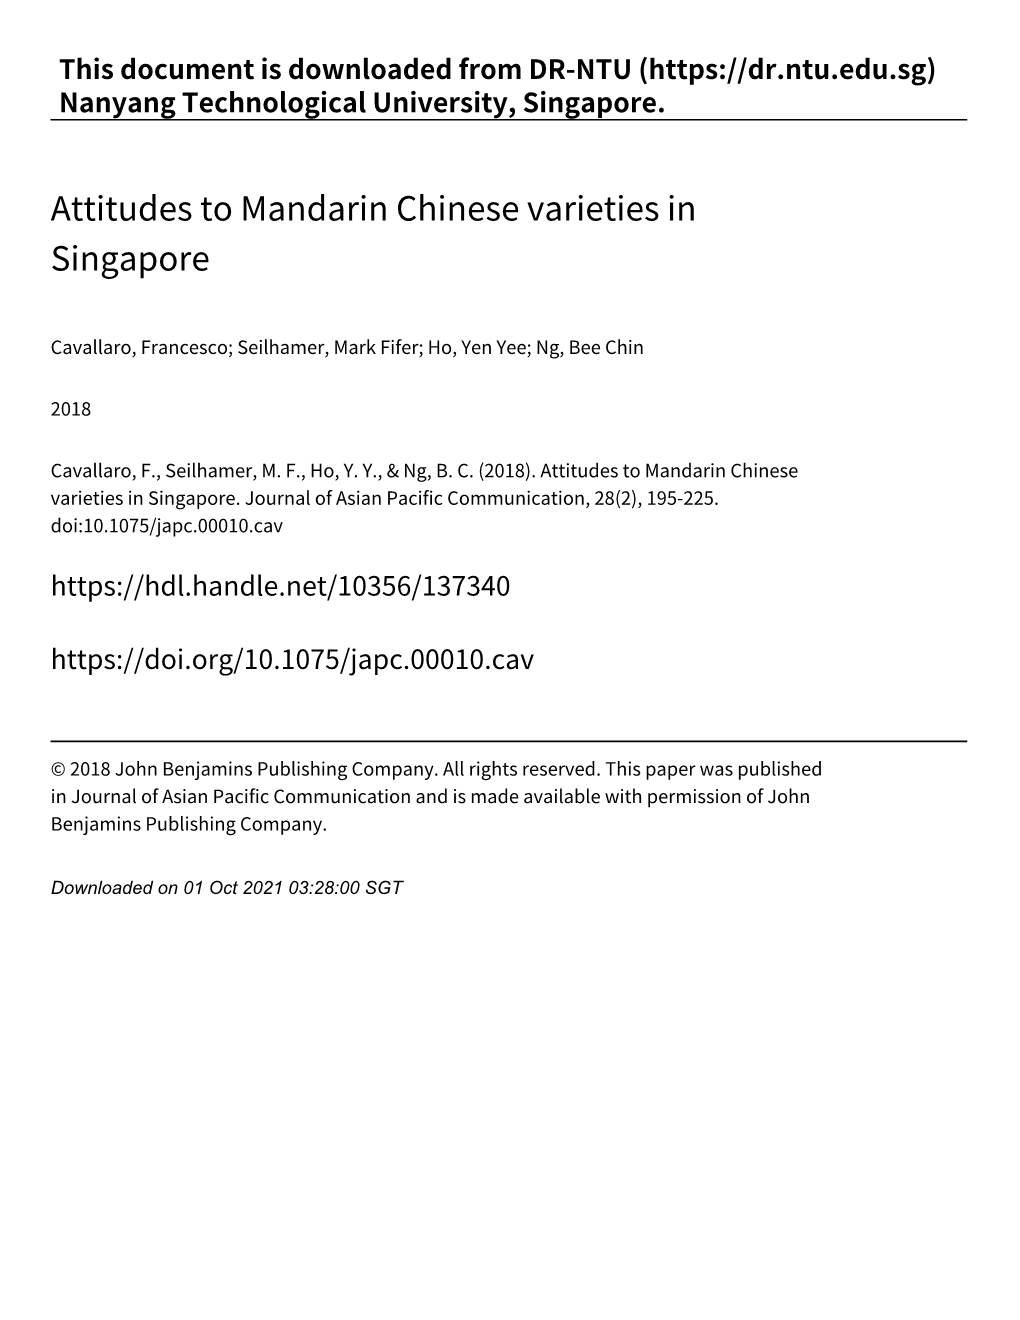 Attitudes to Mandarin Chinese Varieties in Singapore.Pdf